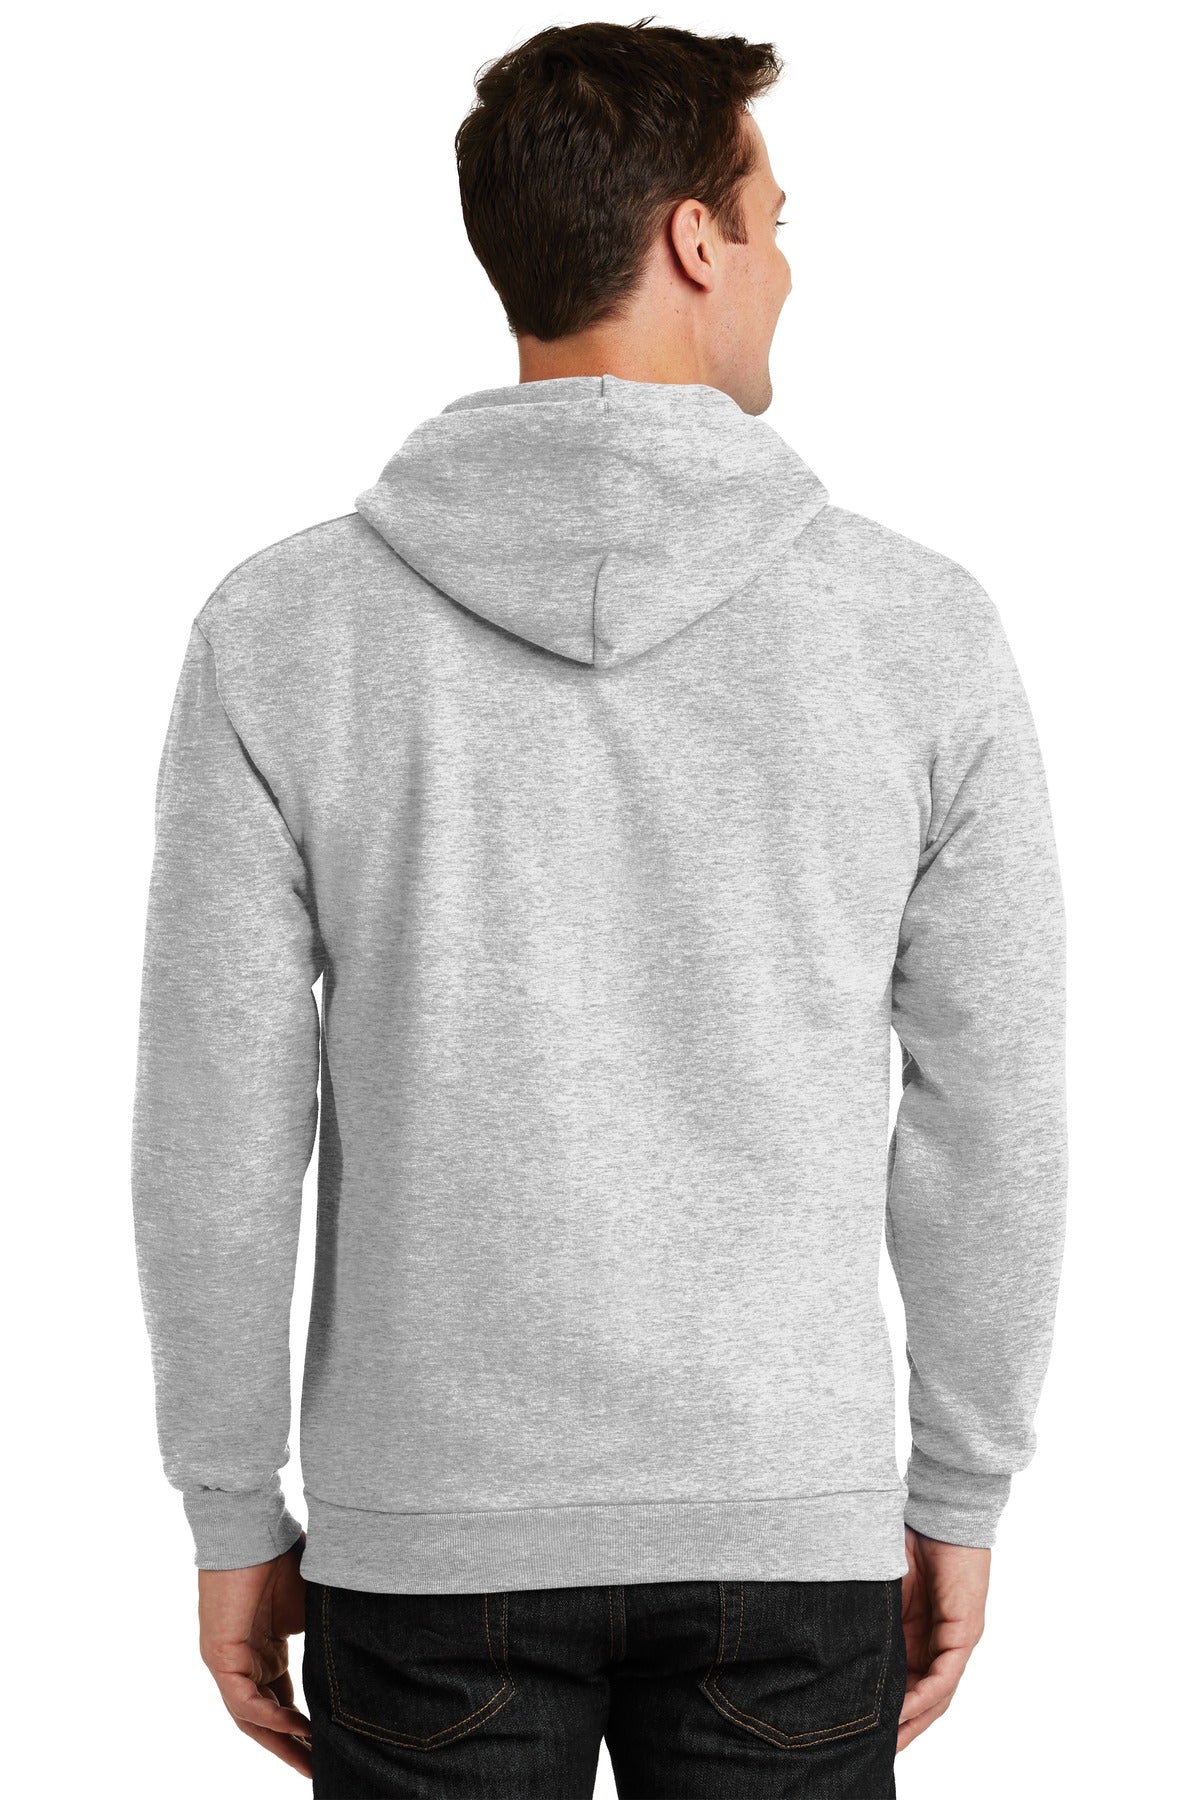 Port & Company® - Essential Fleece Full-Zip Hooded Sweatshirt. PC90ZH - DFW Impression